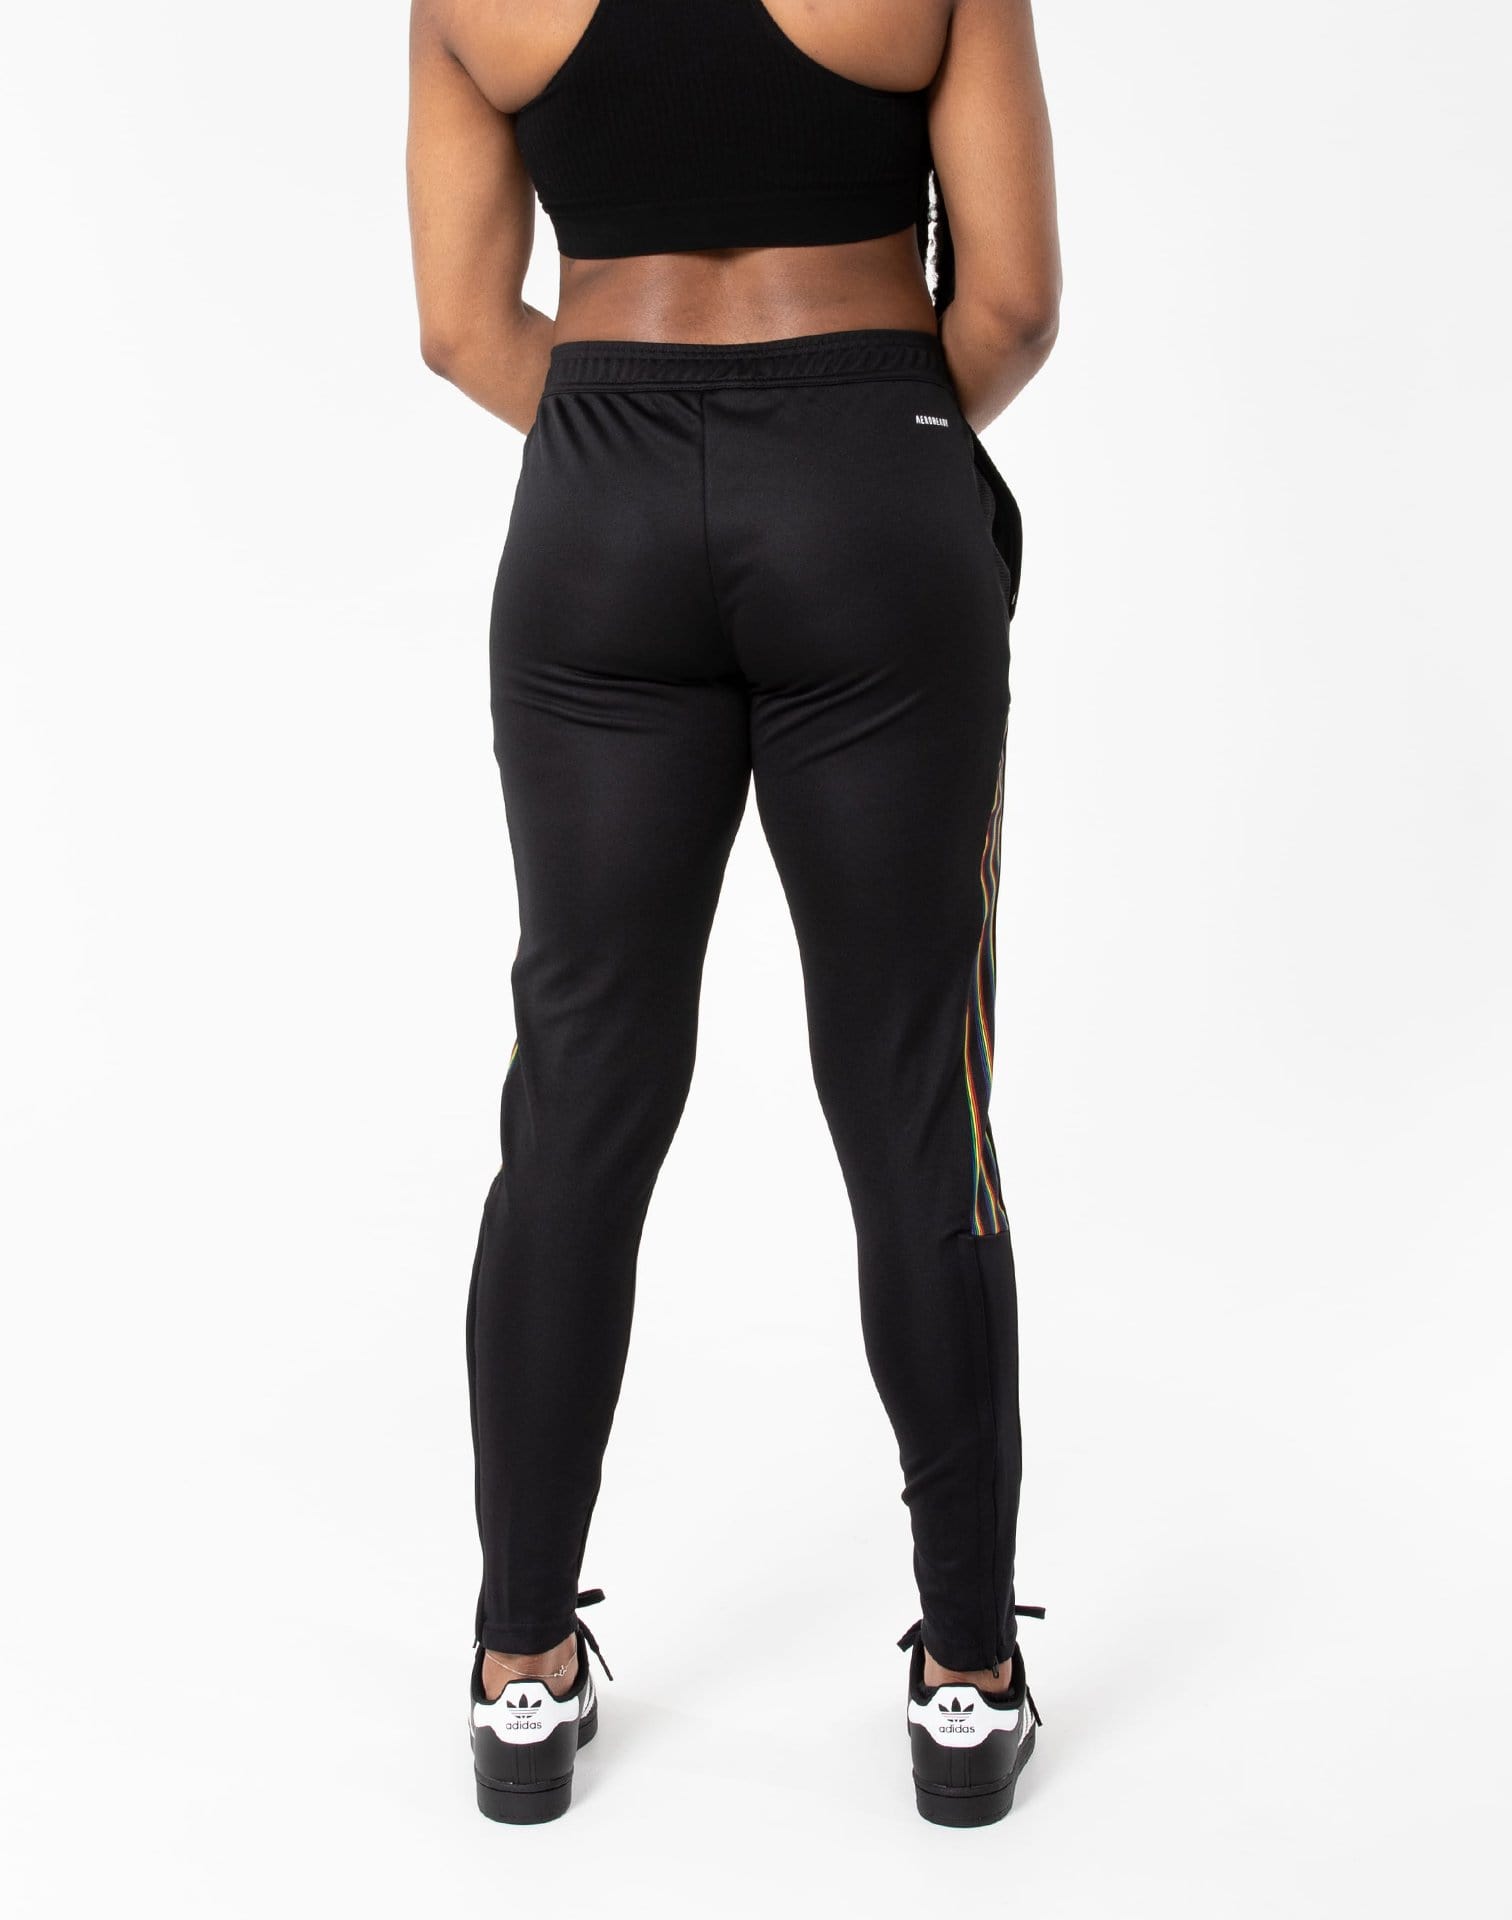  adidas Women's Tiro 17 Training Pants, Black/Black, X-Small :  Clothing, Shoes & Jewelry